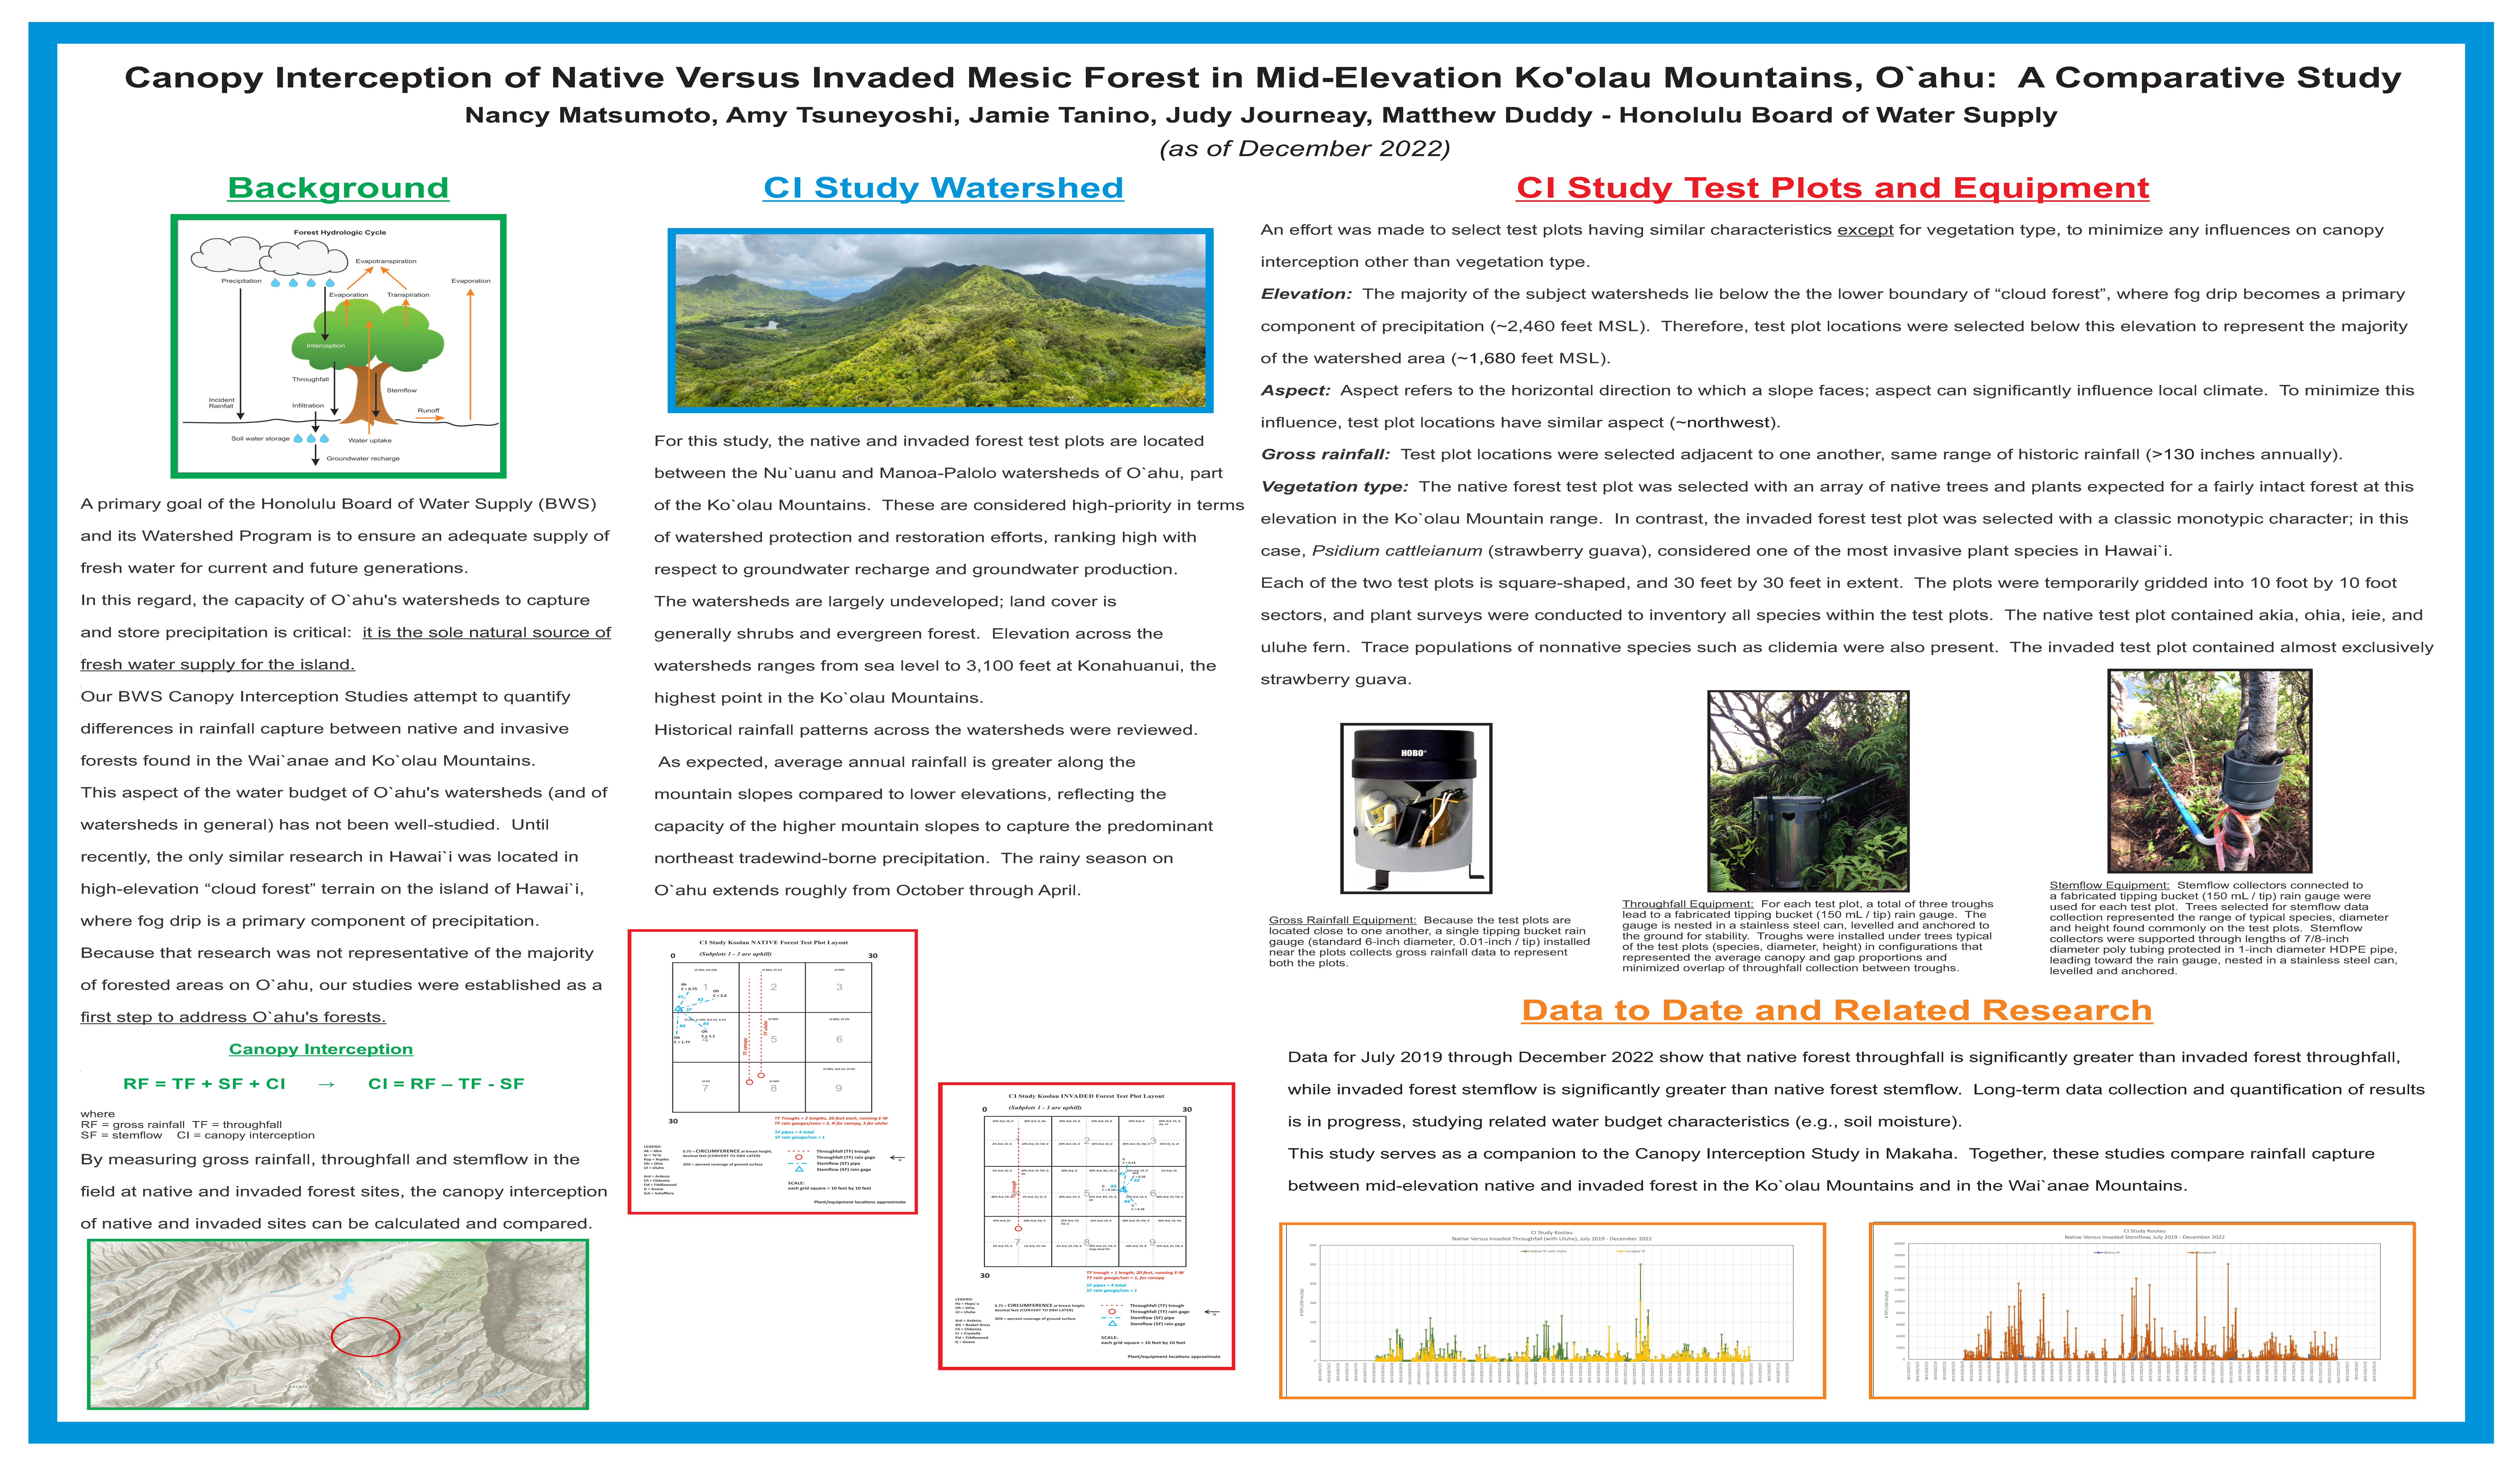 koolau oahu rainfall canopy interception study poster